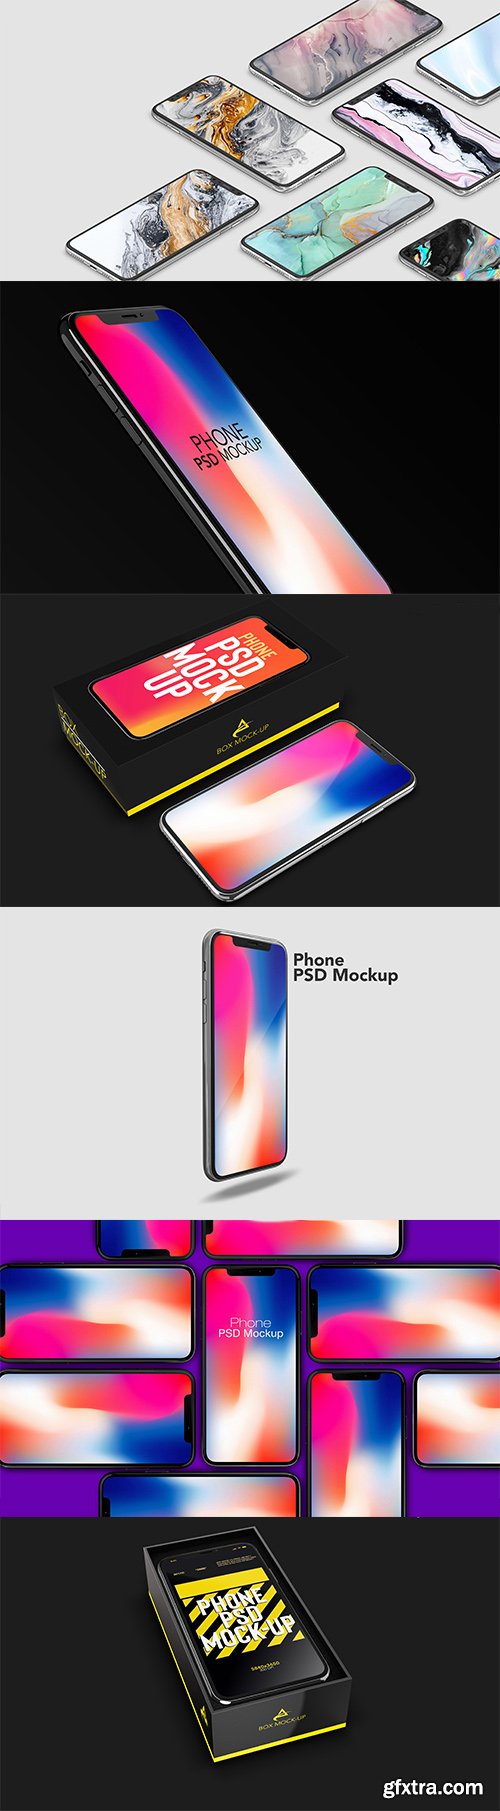 Iphone X PSD Mockup Pack